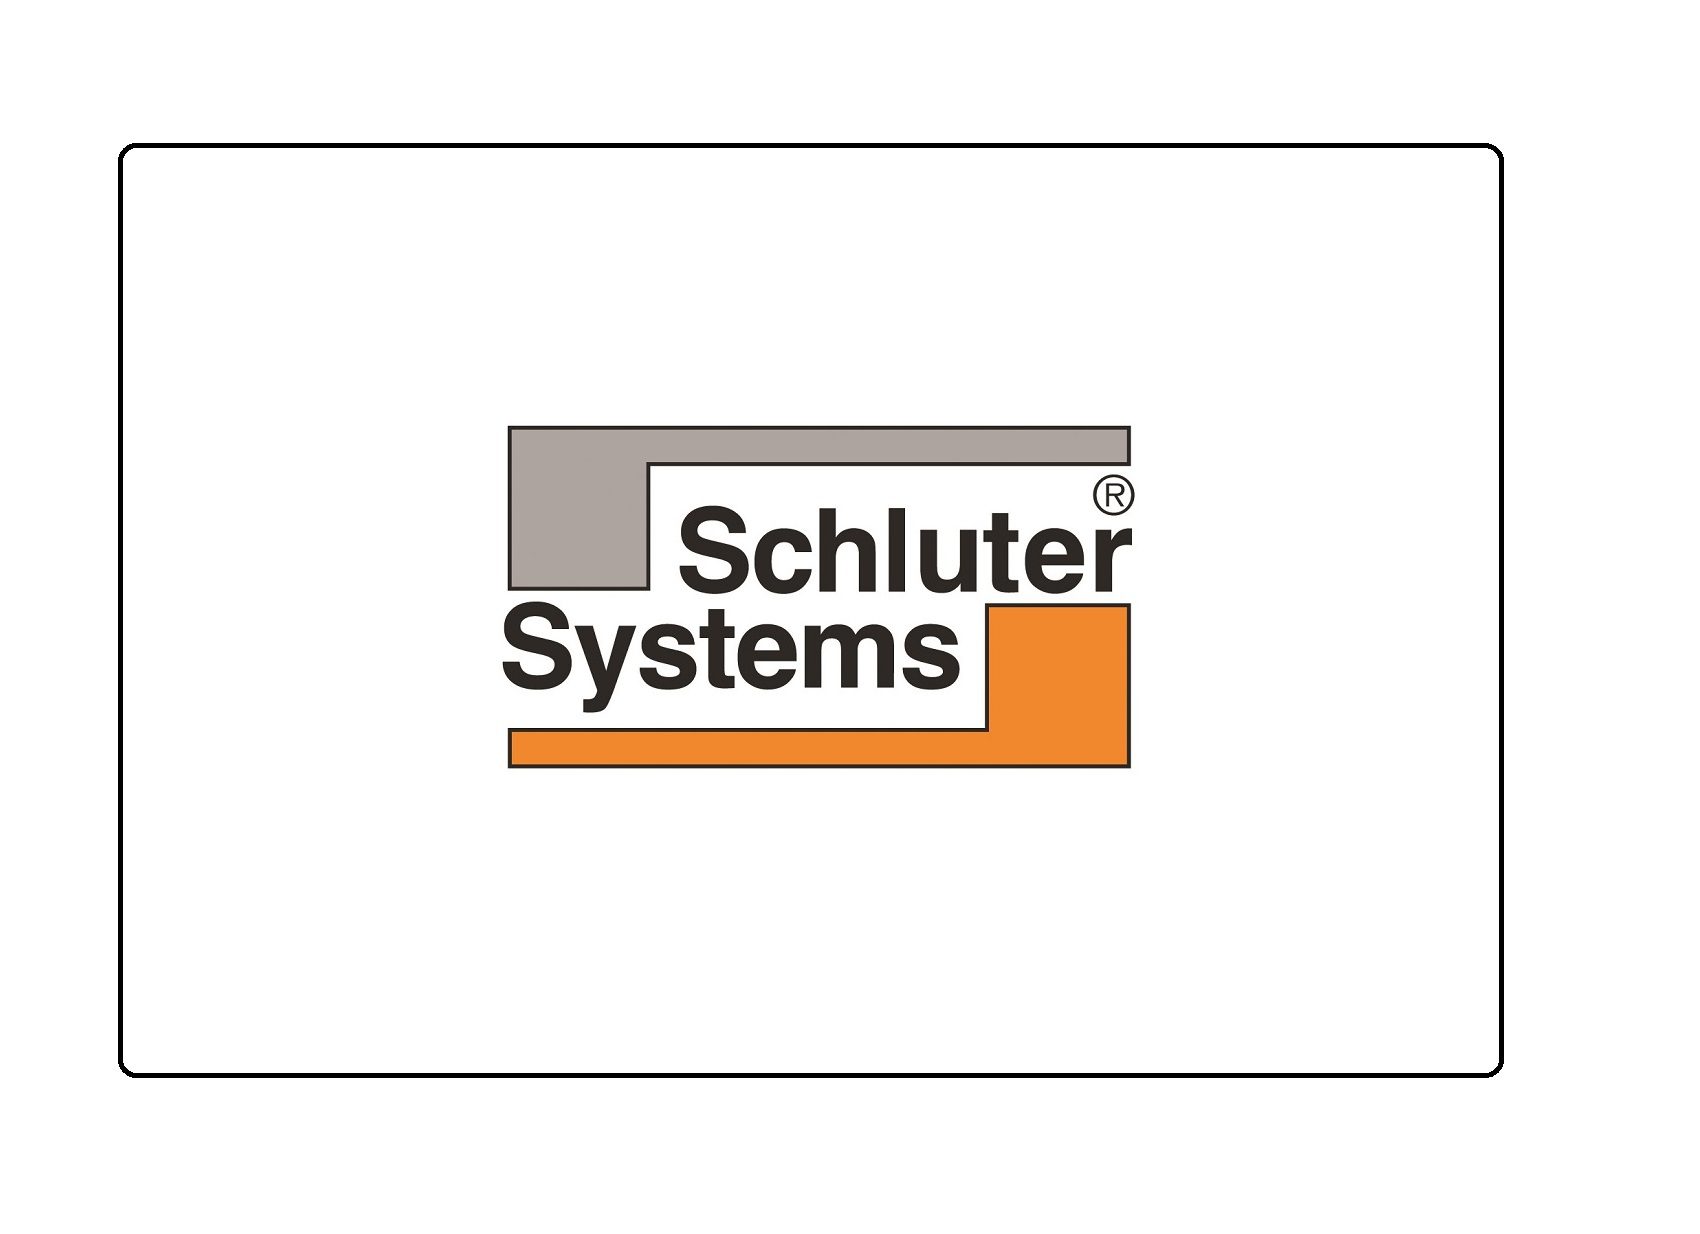 Schluter Systems Logo